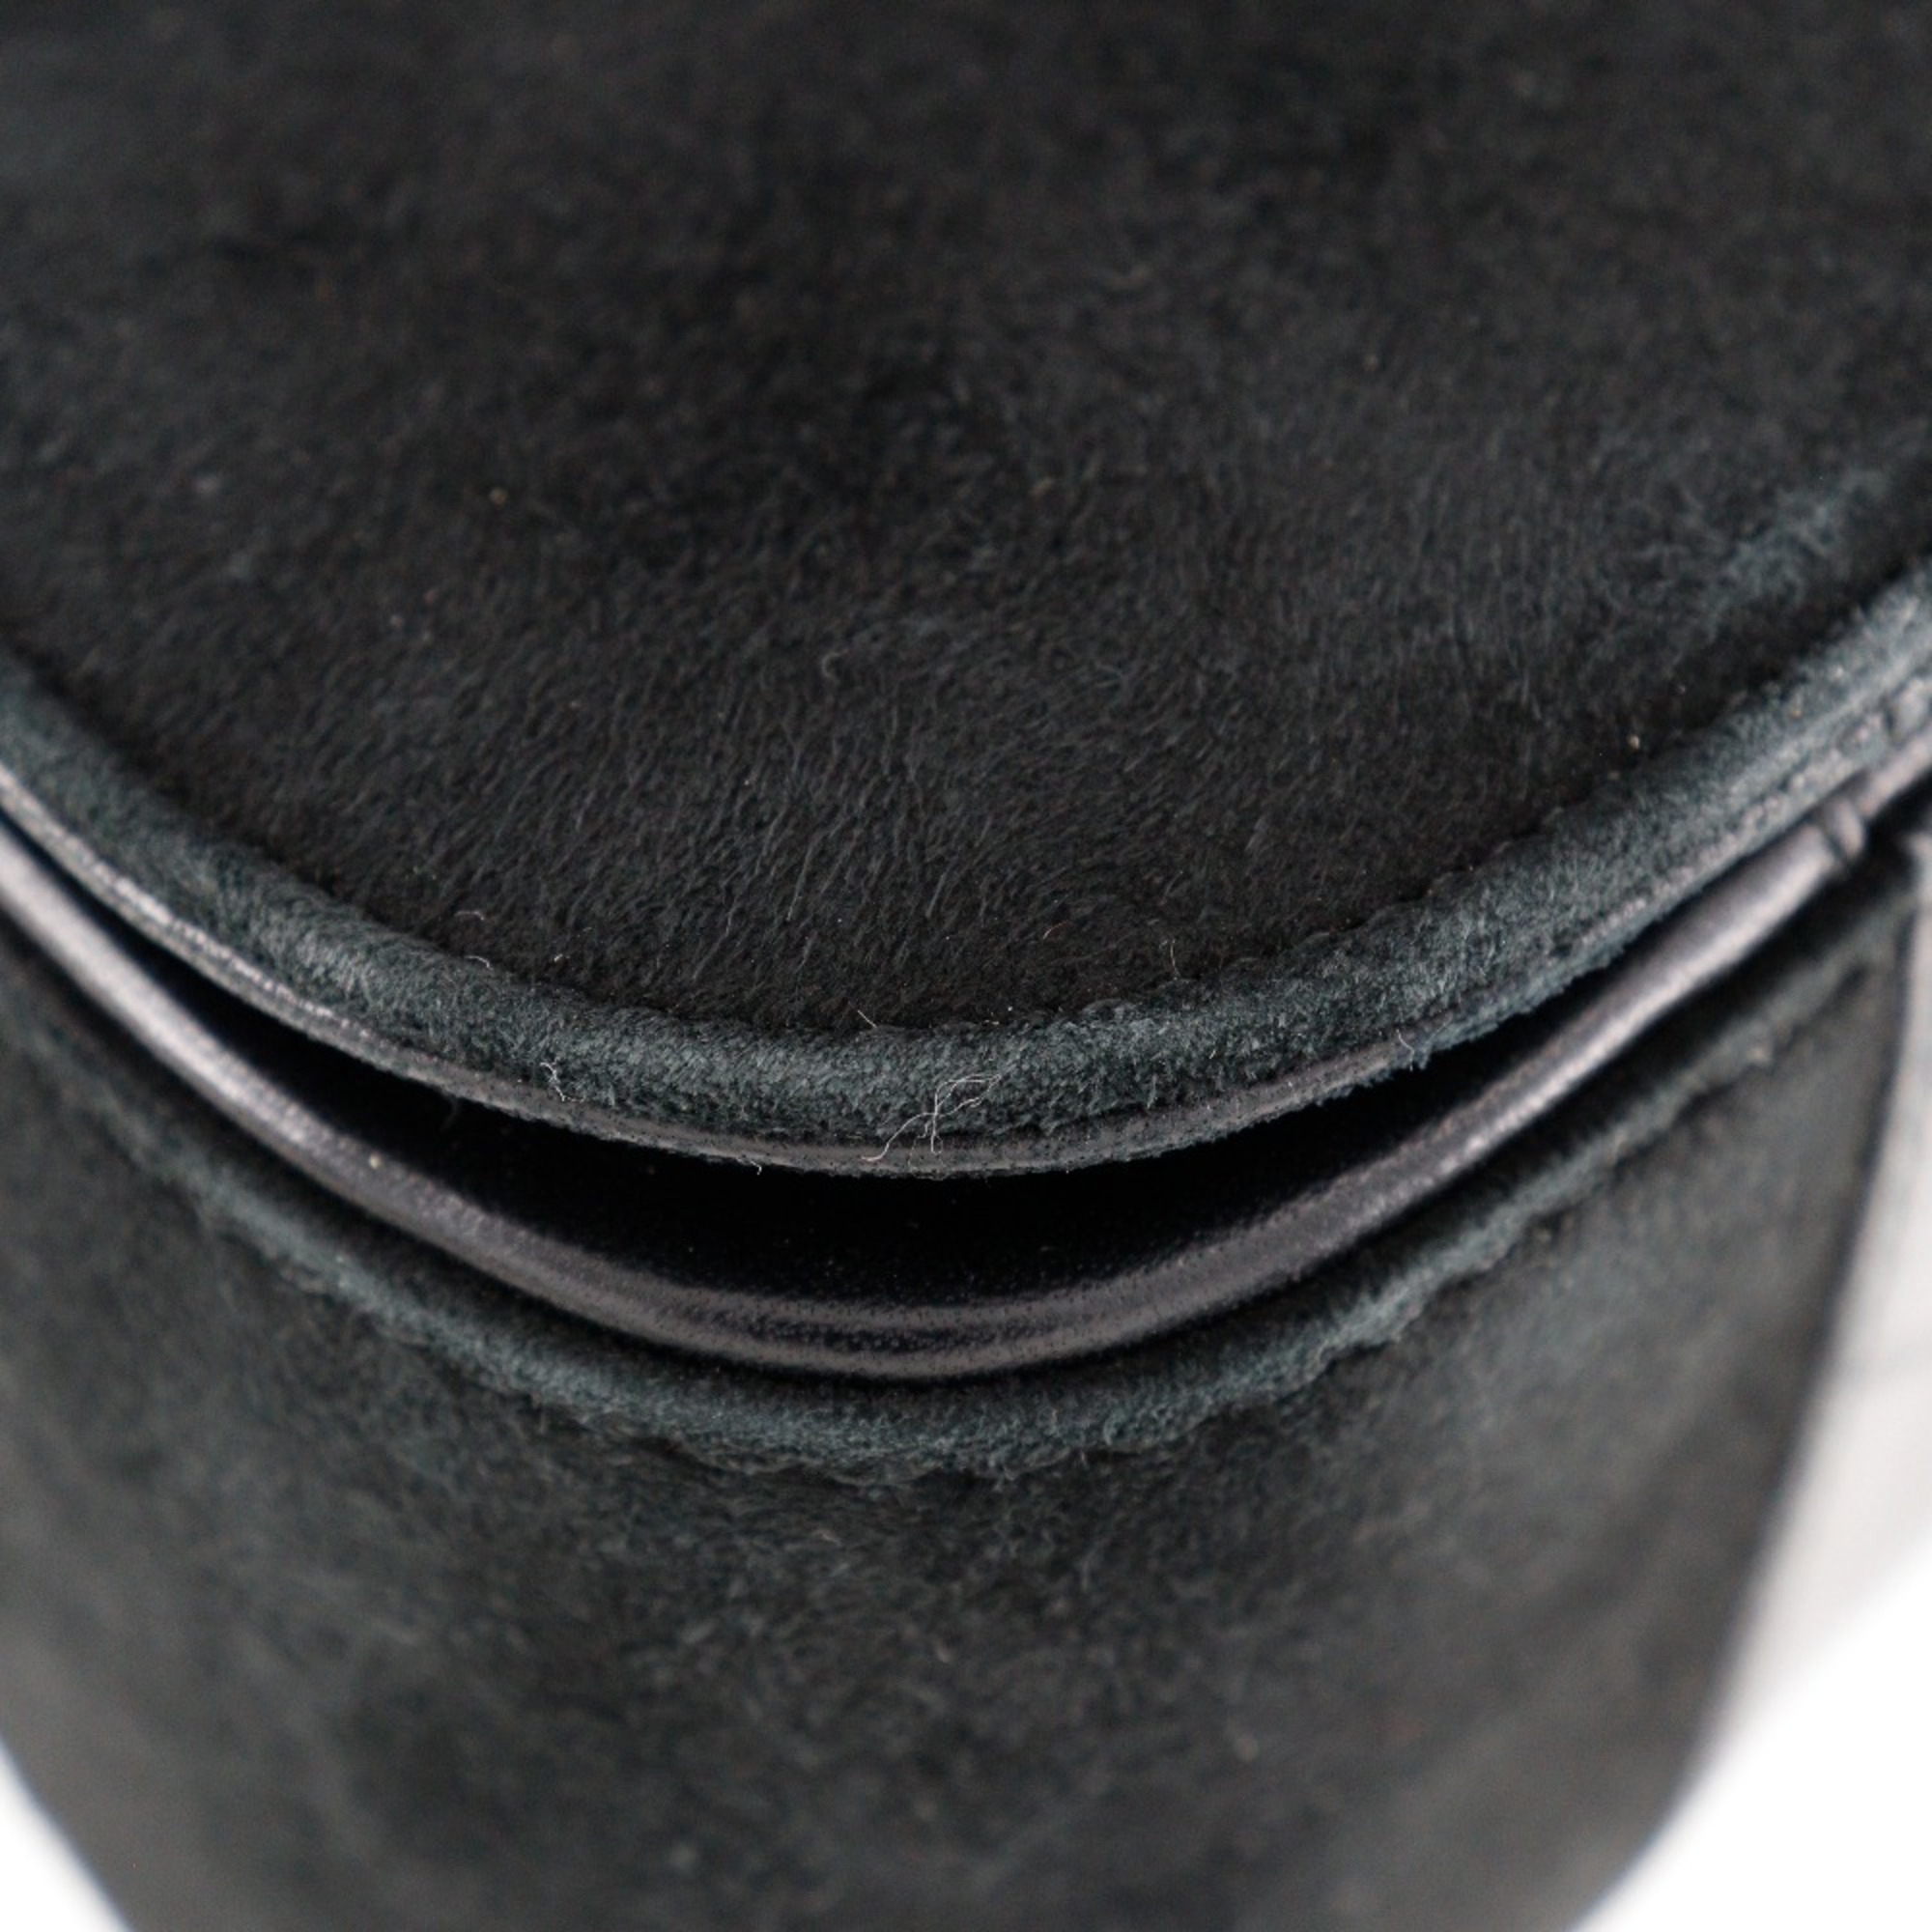 BALLY Shoulder Bag Suede Black A5 Type Women's H150224073